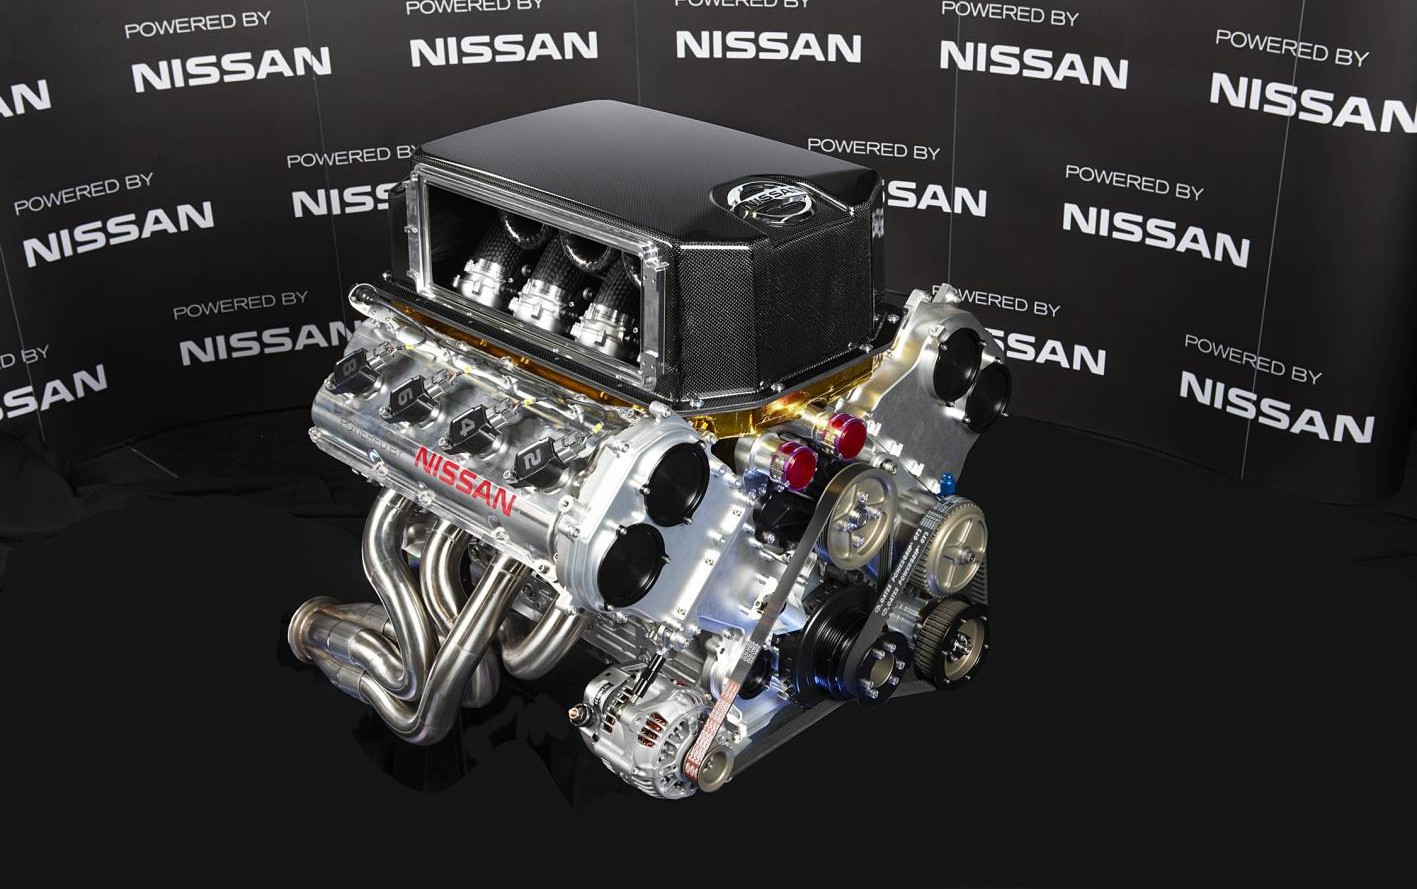 Nissan V8 Supercar engine revealed Photos 1 of 2 